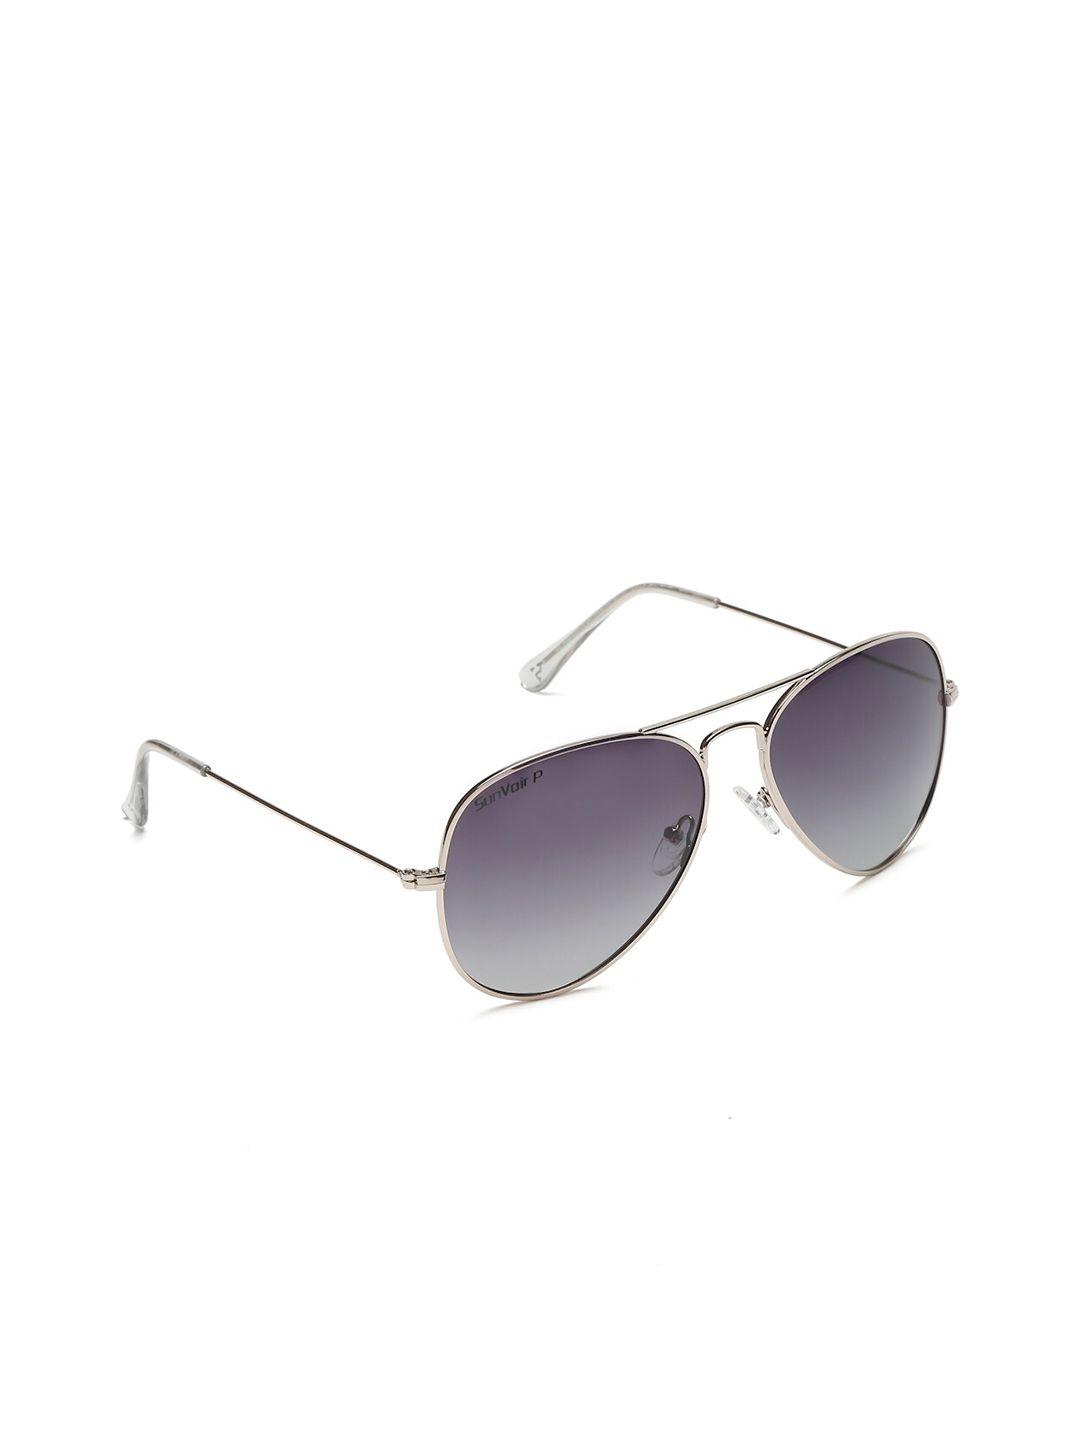 sunvoir unisex grey lens & silver-toned aviator sunglasses with polarised lens